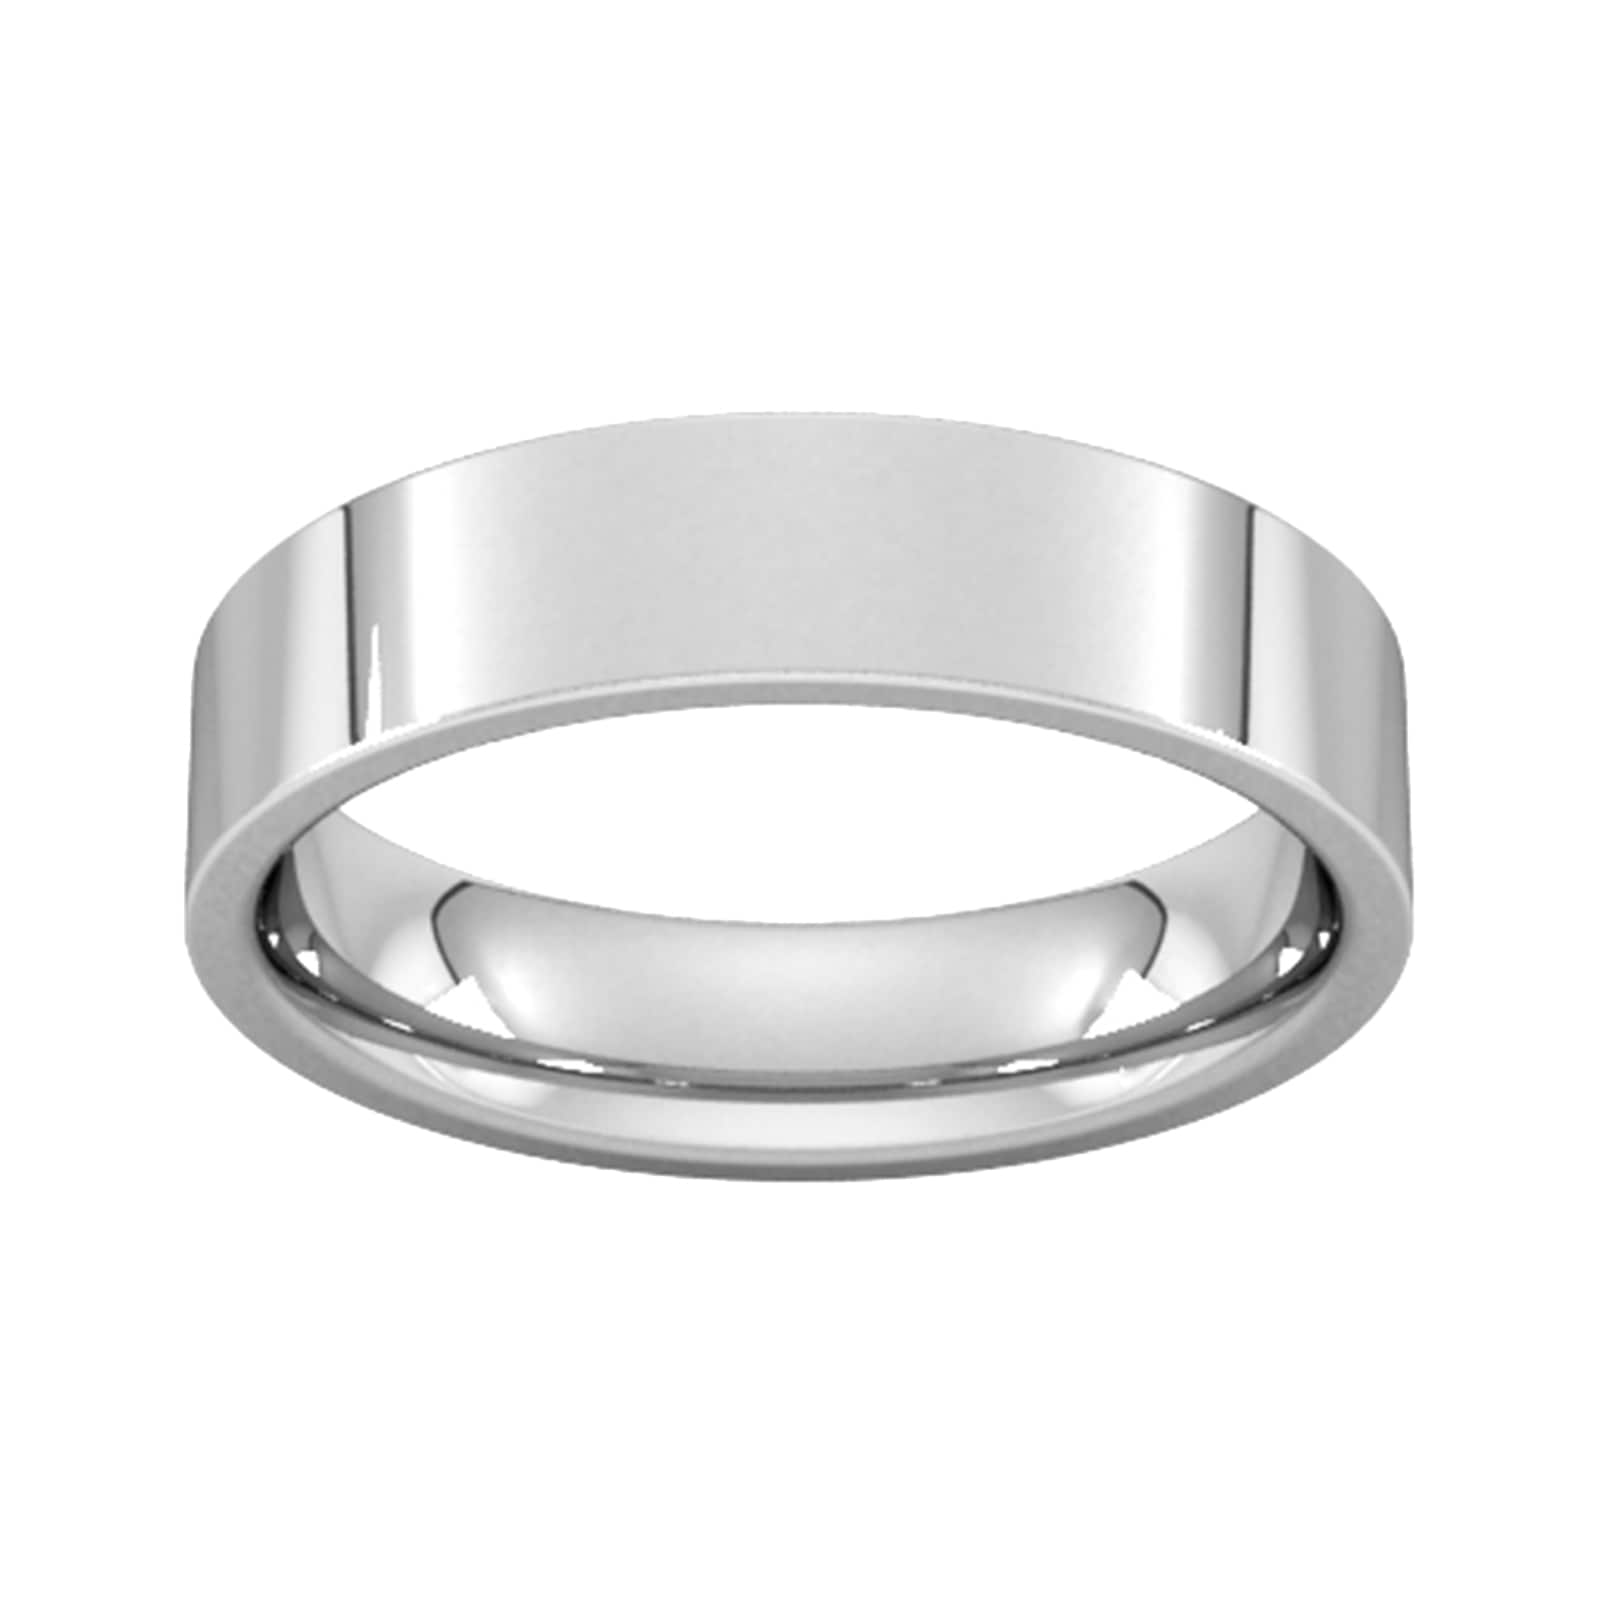 5mm Flat Court Heavy Wedding Ring In 950 Palladium - Ring Size P